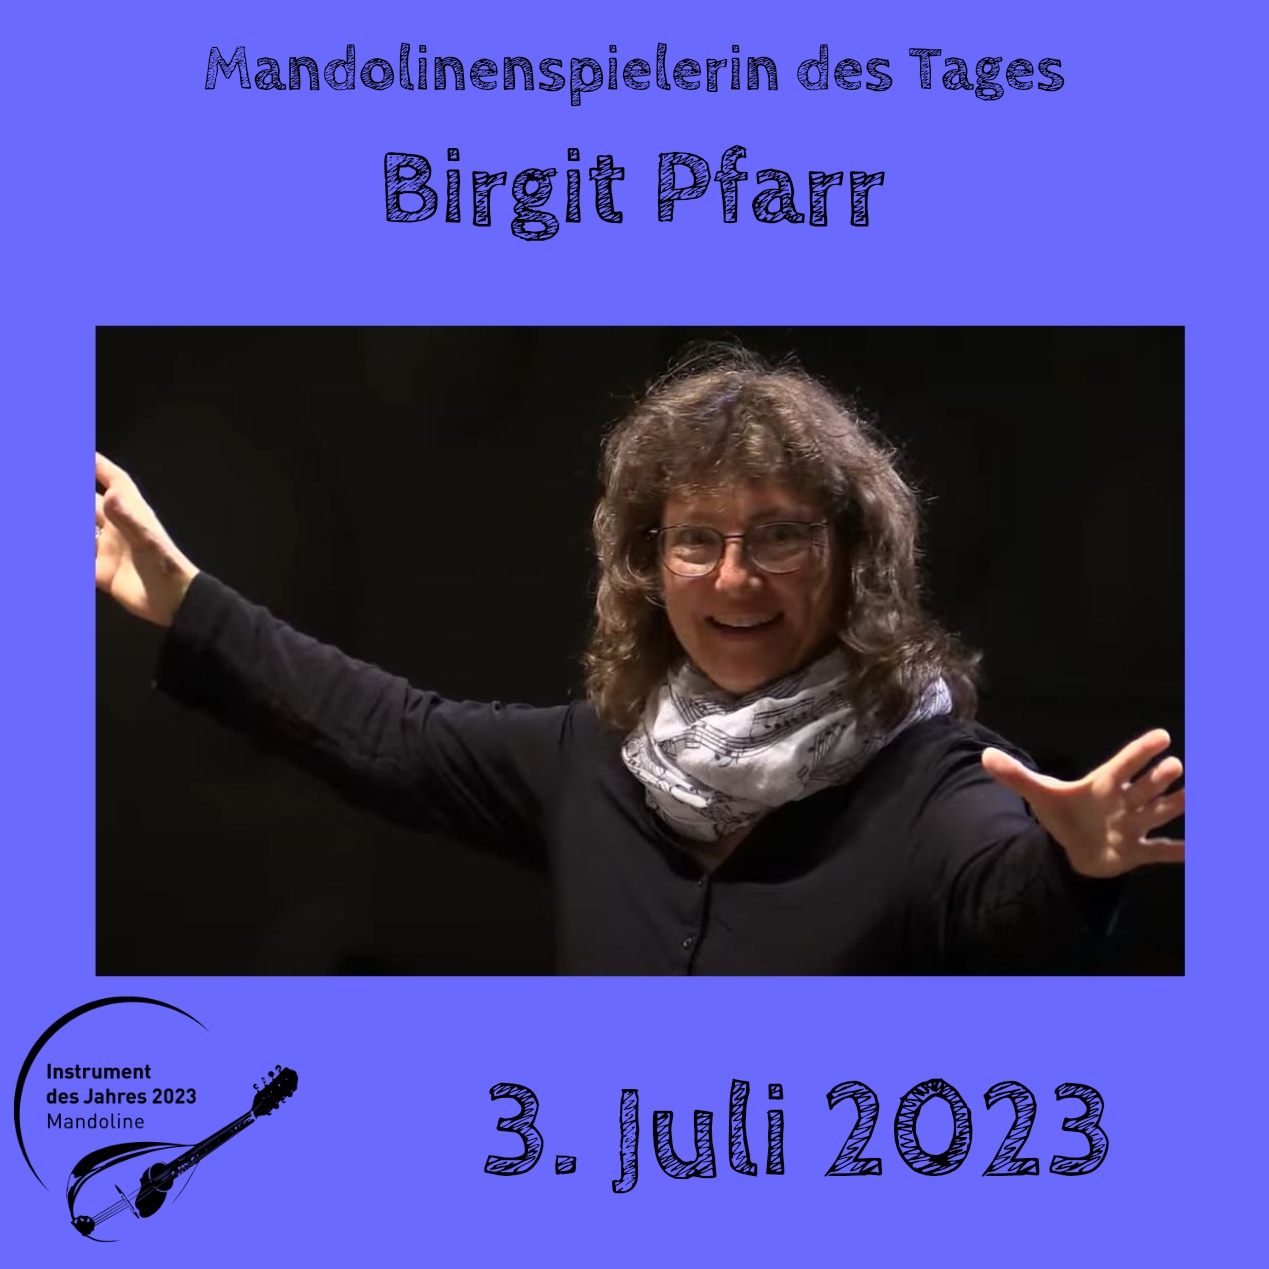 3. Juli Birgit Pfarr Mandoline Instrument des Jahres 2023 Mandolinenspieler Mandolinenspielerin des Tages